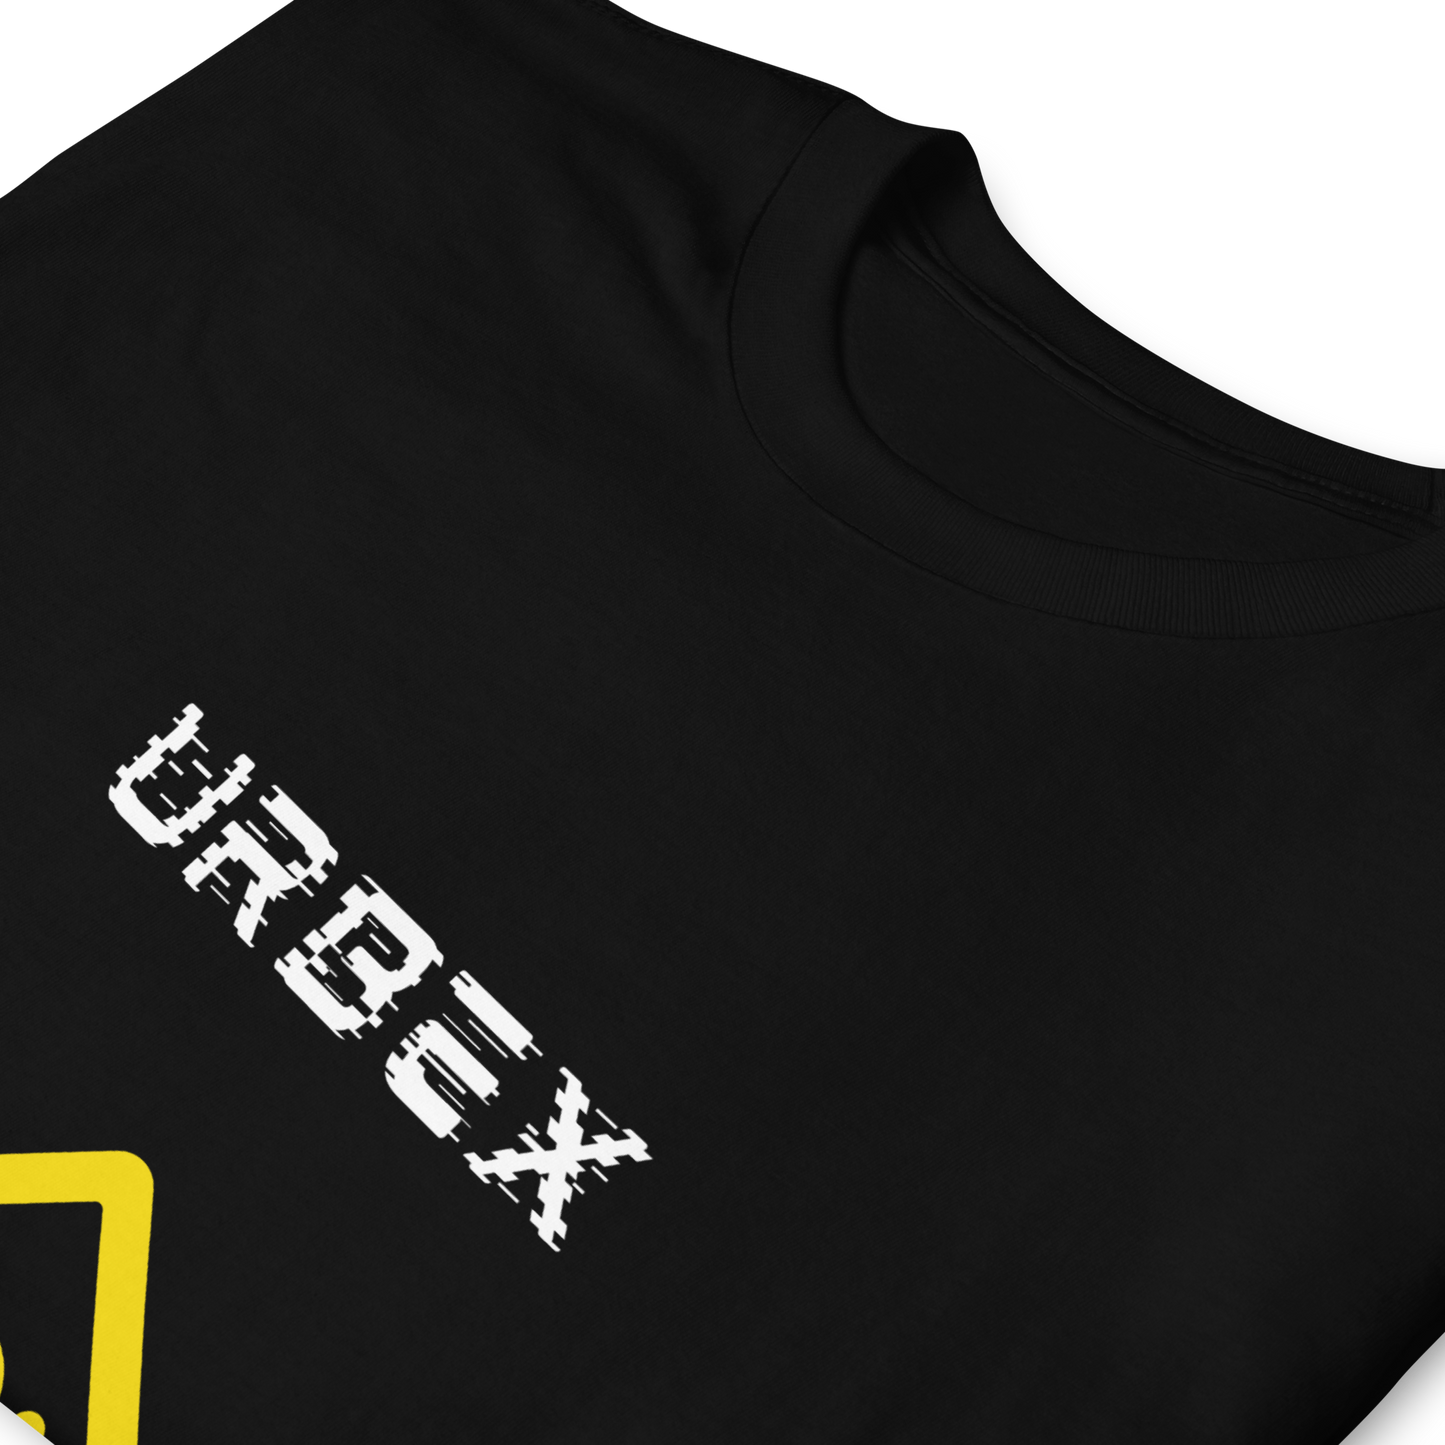 Black and Yellow Urbex Skull Unisex T-Shirt │ Abandoned World Photography Urbex Shop